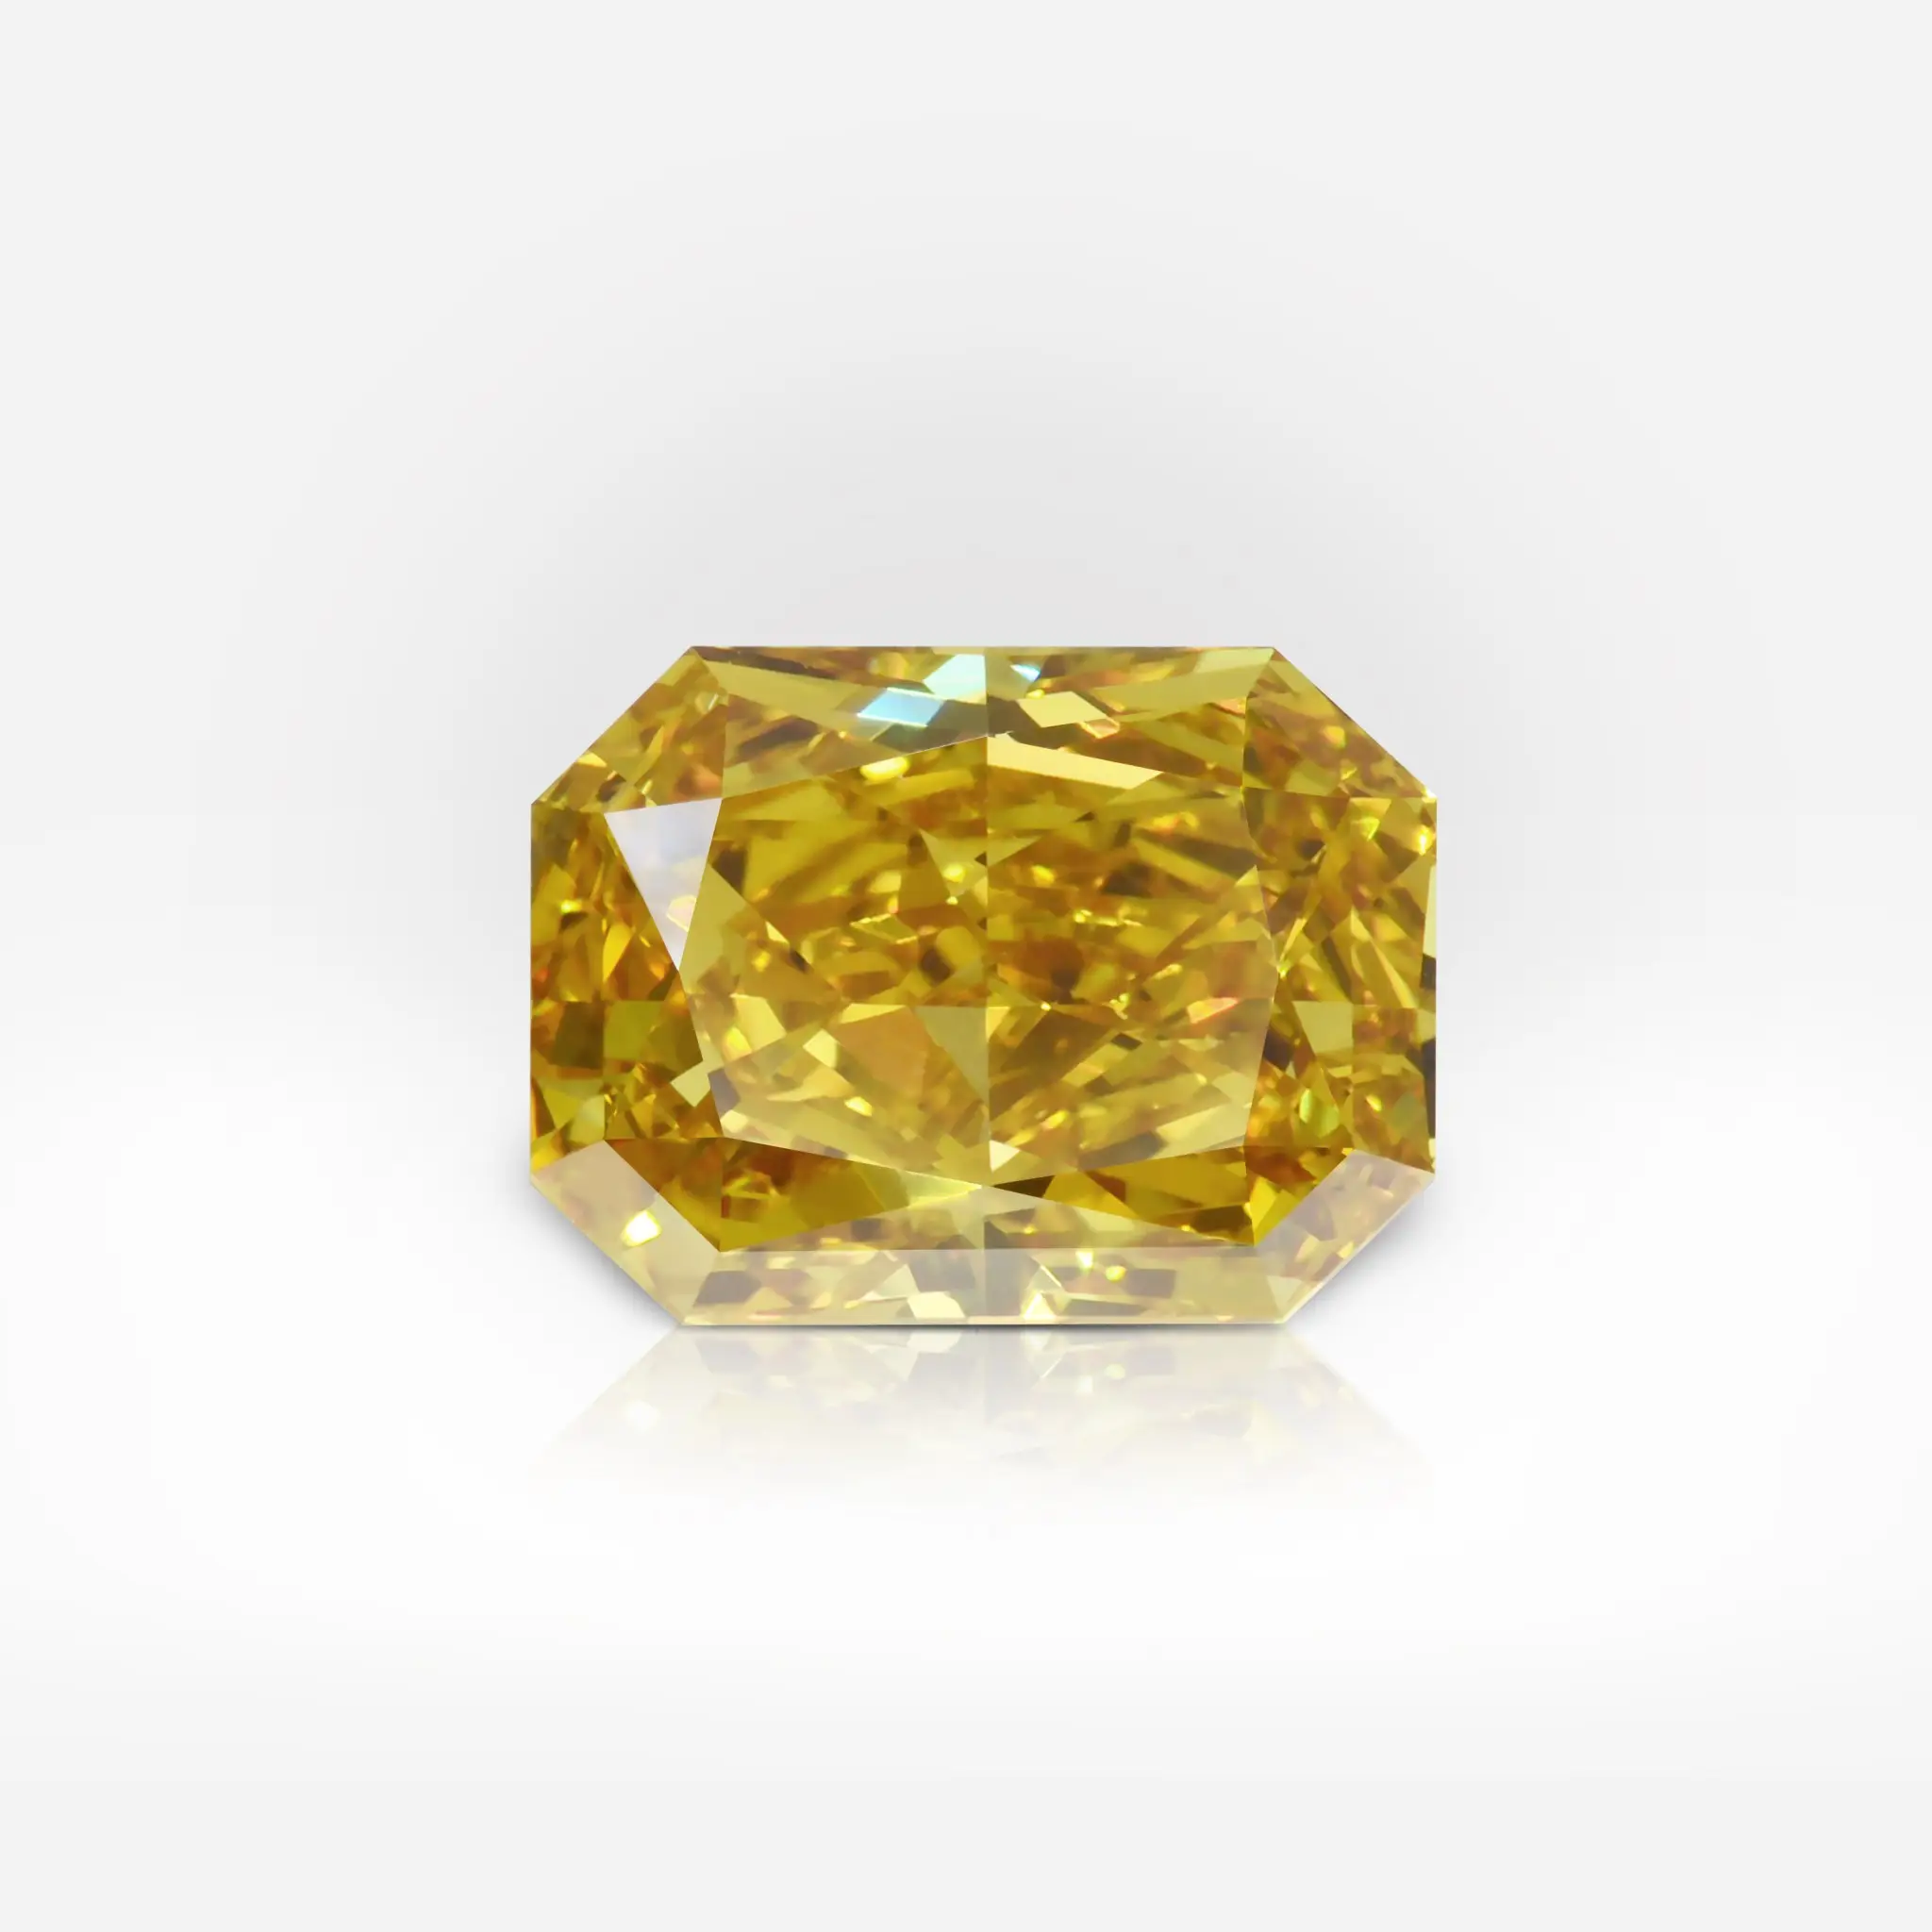 3.04 carat Fancy Vivid Orangy Yellow VS2 Radiant Shape Diamond GIA - picture 1